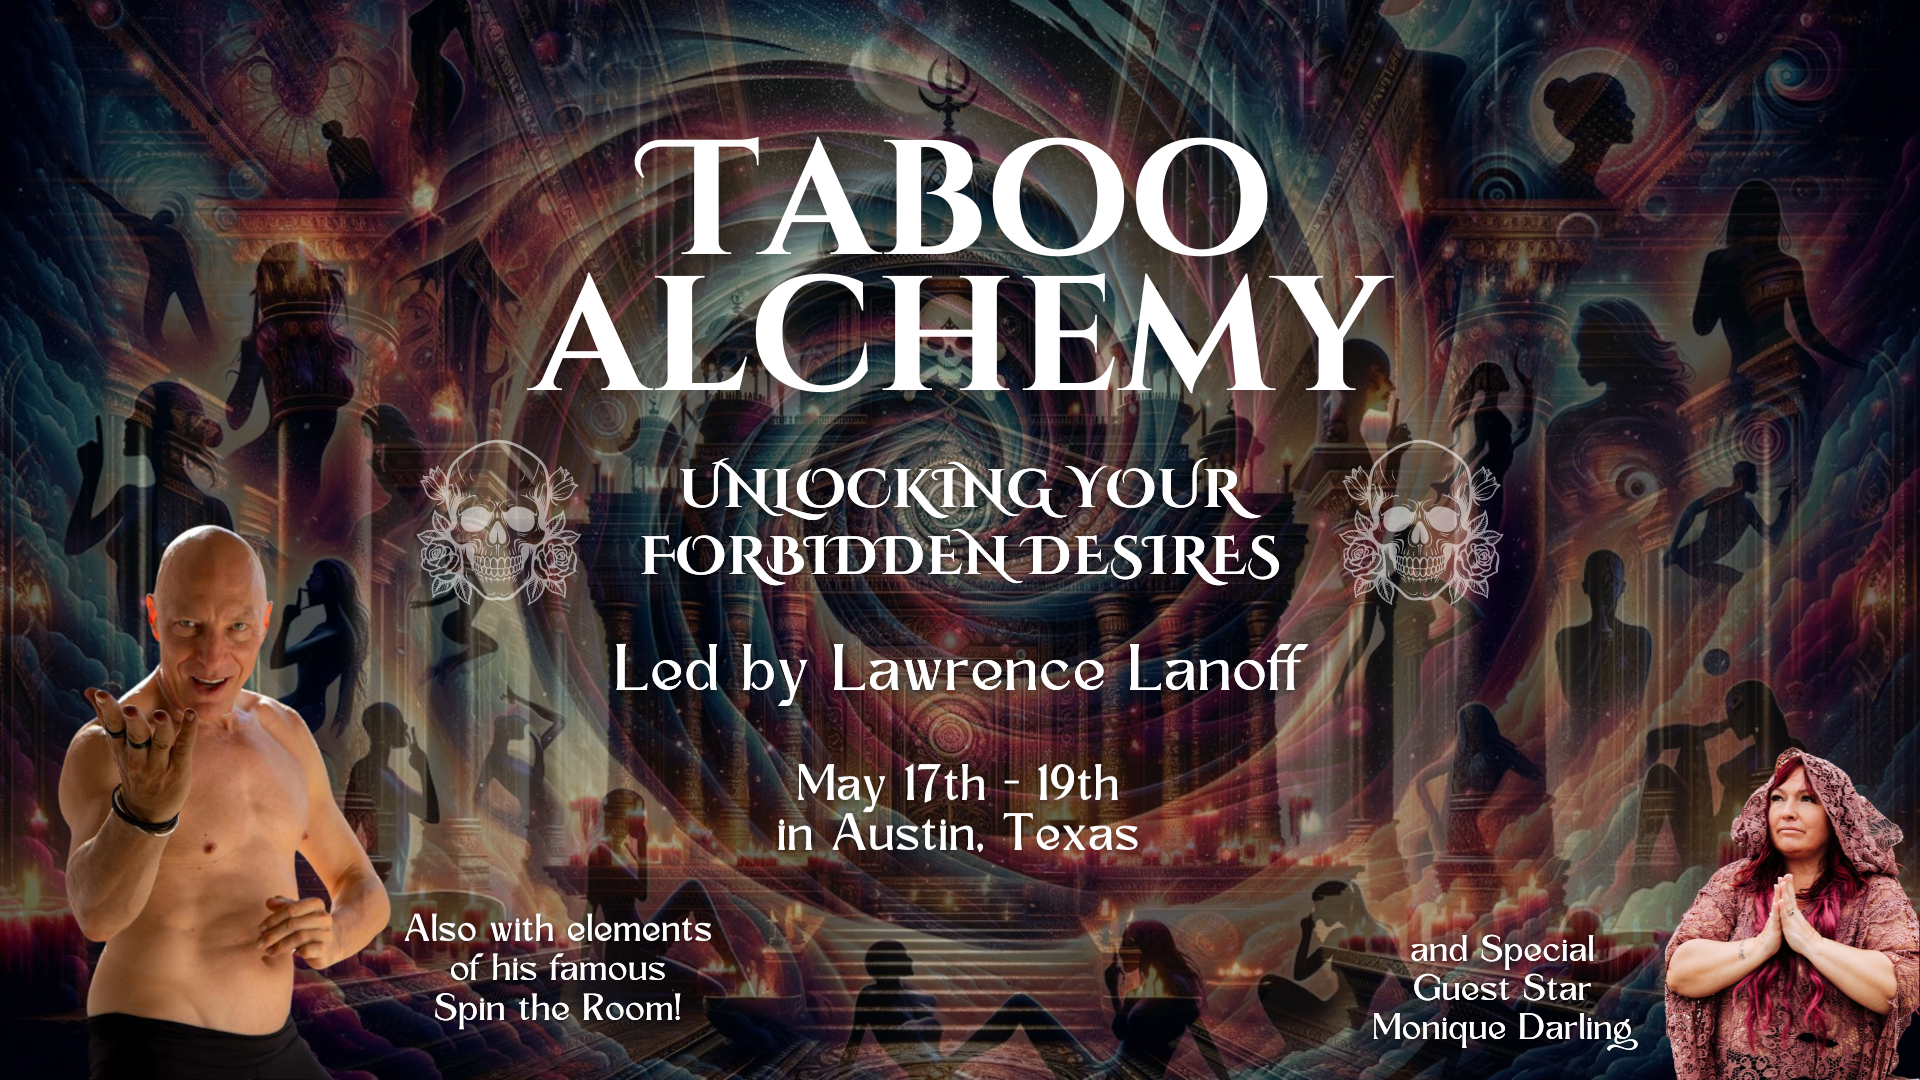 Taboo Alchemy: Unlocking Your Forbidden Desires w/ Lawrence Lanoff